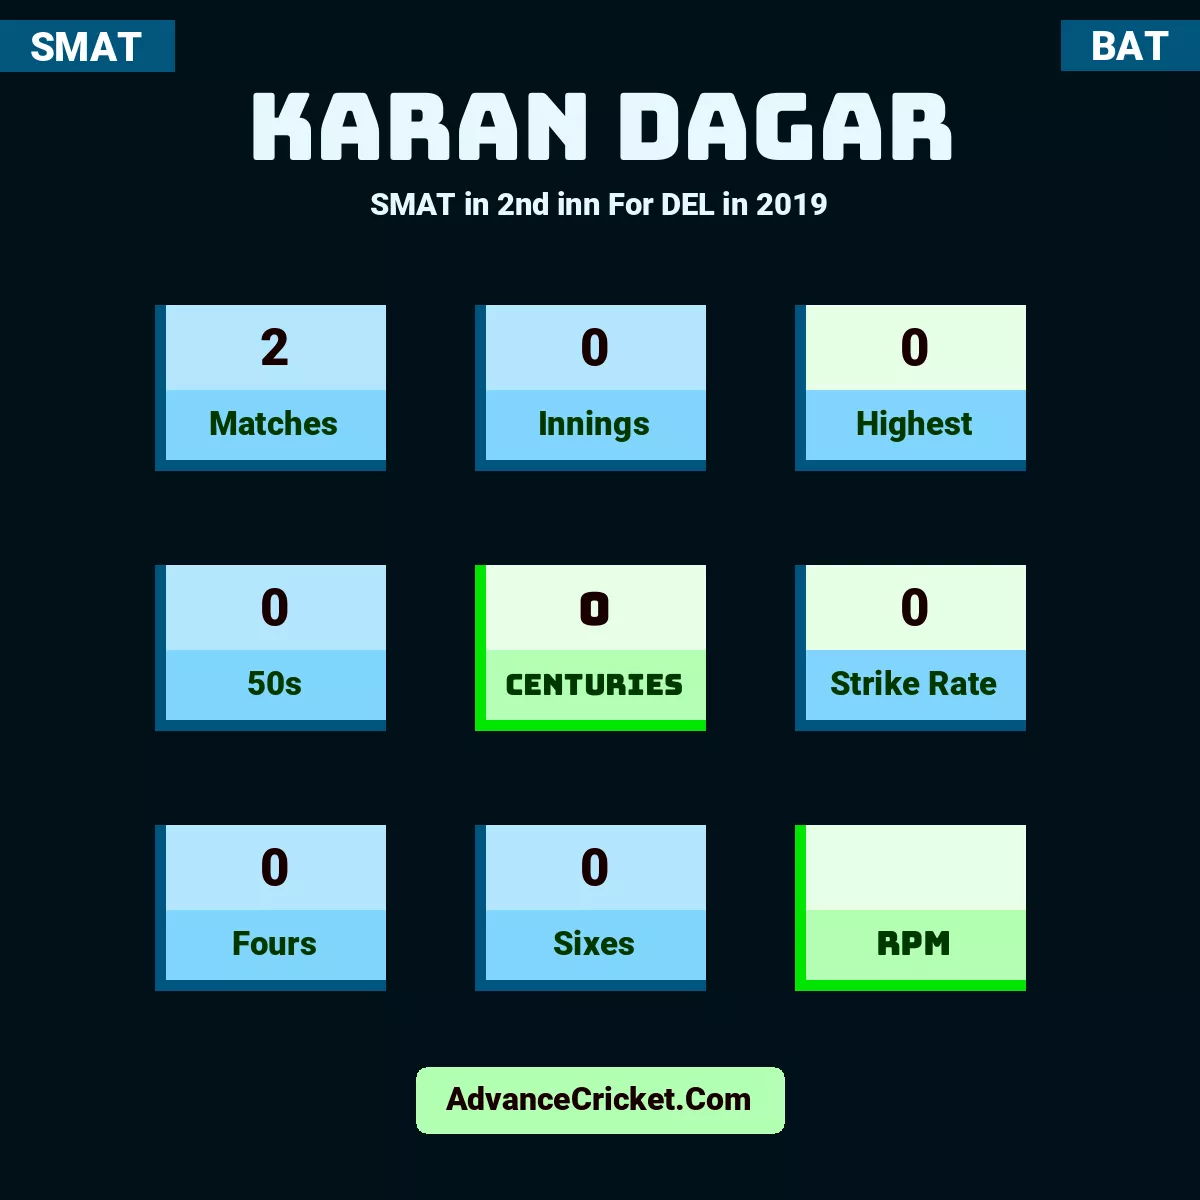 Karan Dagar SMAT  in 2nd inn For DEL in 2019, Karan Dagar played 2 matches, scored 0 runs as highest, 0 half-centuries, and 0 centuries, with a strike rate of 0. K.Dagar hit 0 fours and 0 sixes.